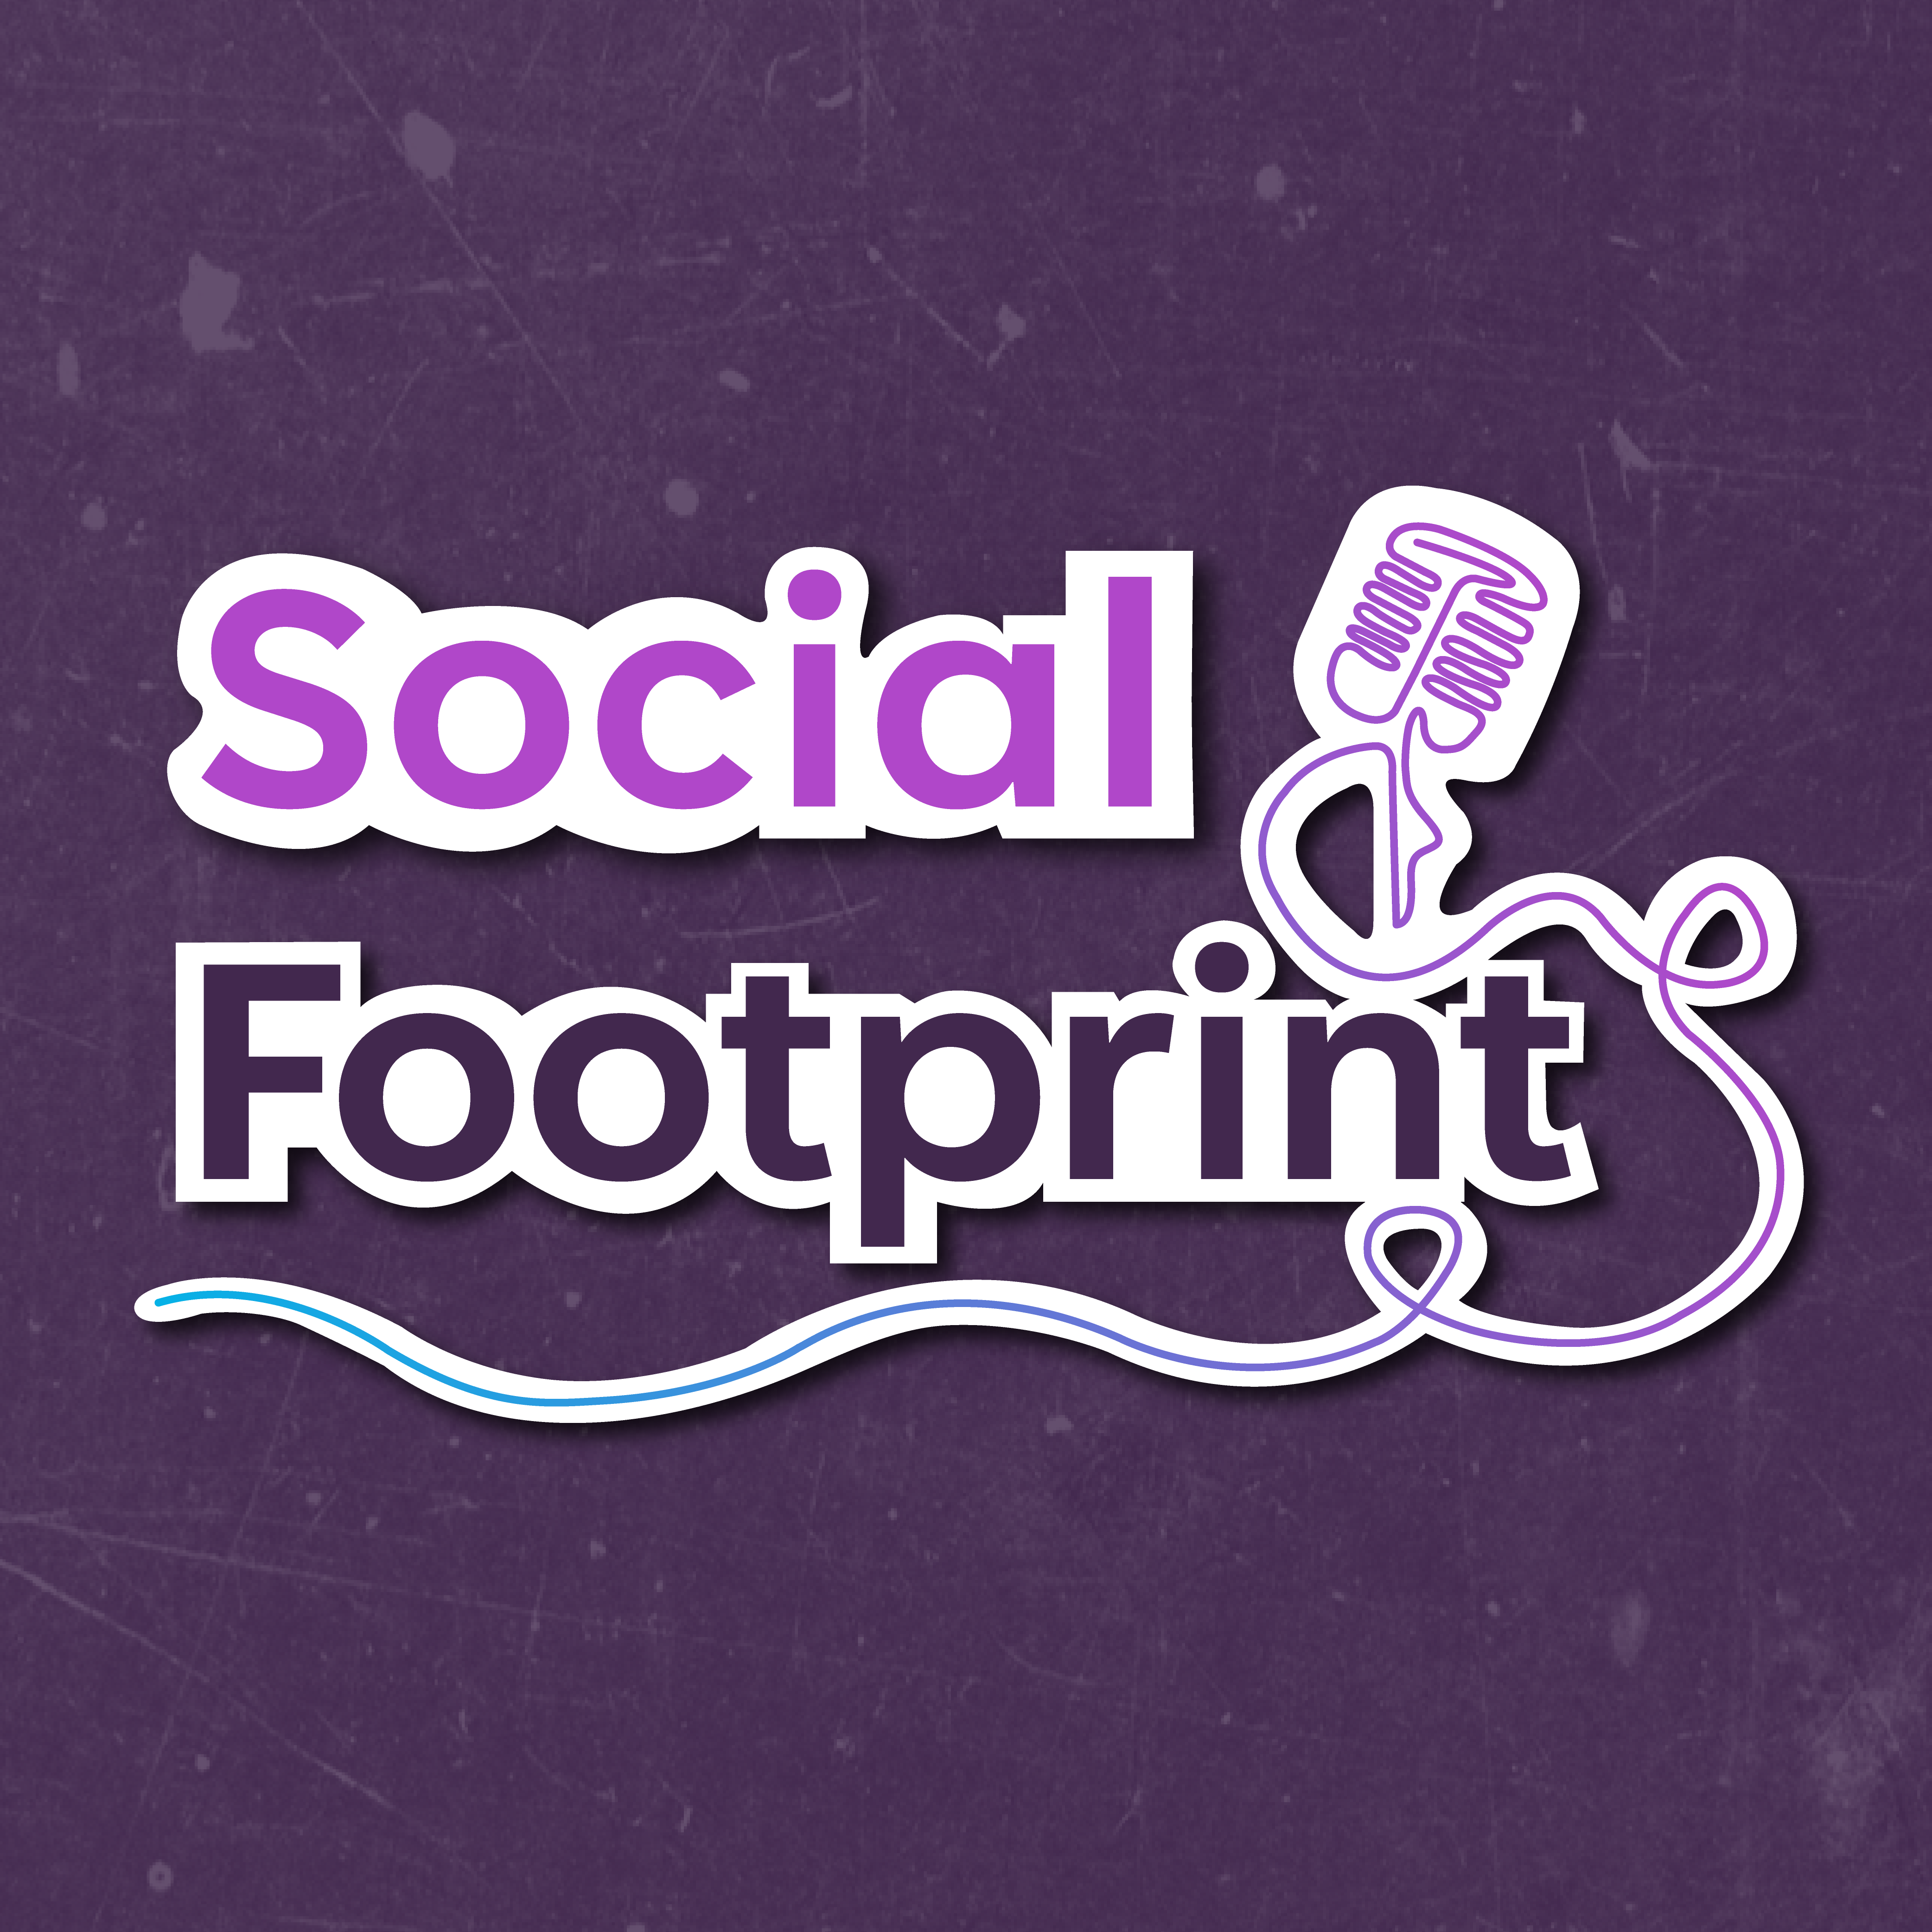 The Social Footprint Official